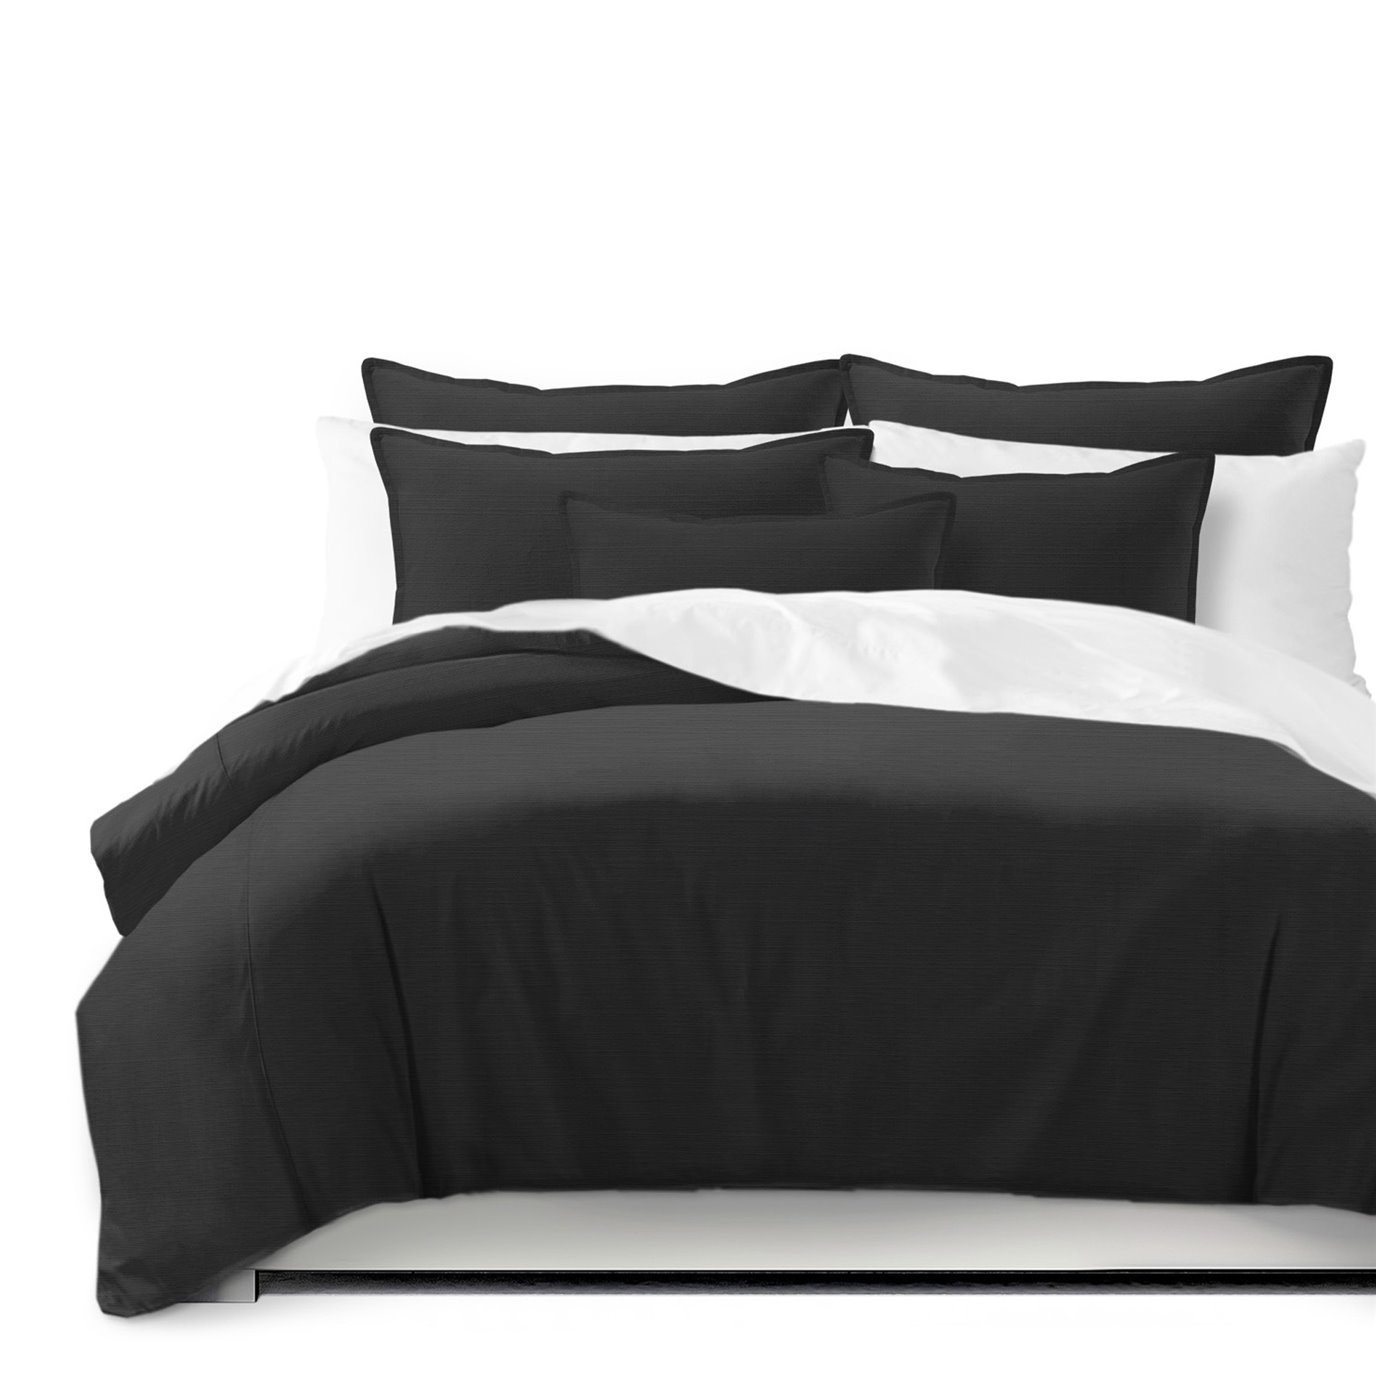 Nova Black Comforter and Pillow Sham(s) Set - Size Twin